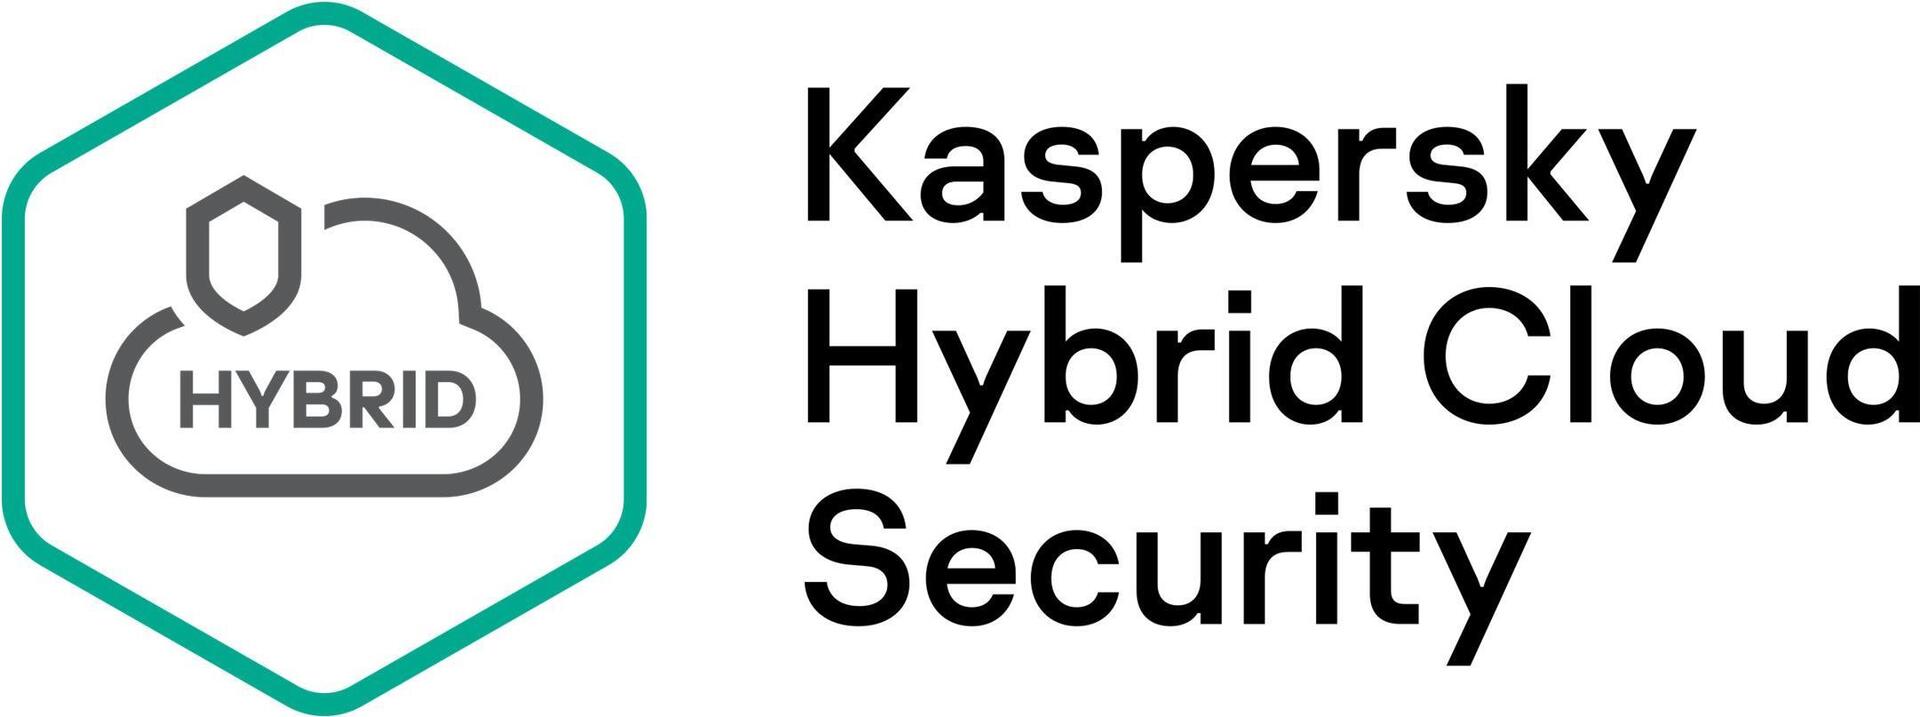 Kaspersky Hybrid Cloud Security (KL4554XAMF8)